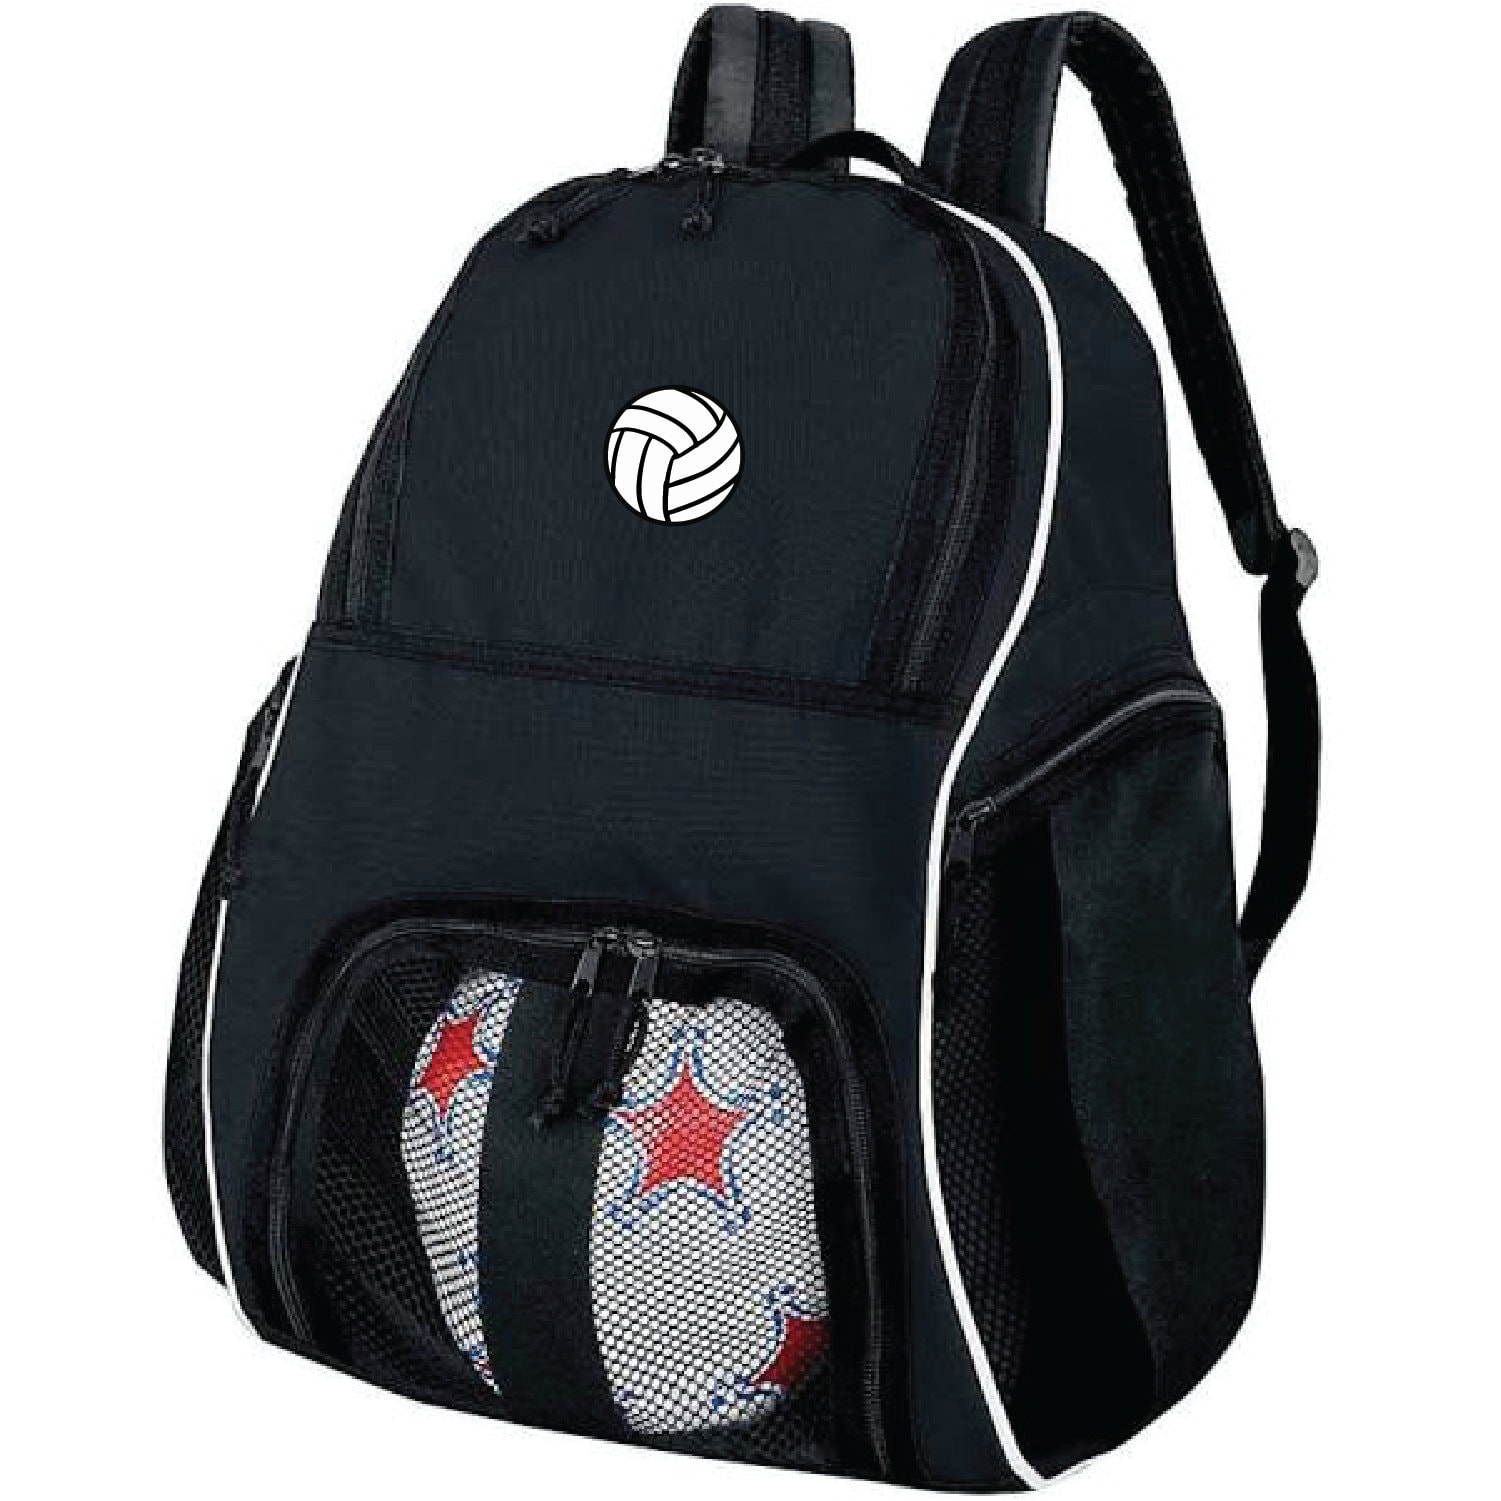 Nike | Bags | Nike Volleyball Book Bag | Poshmark